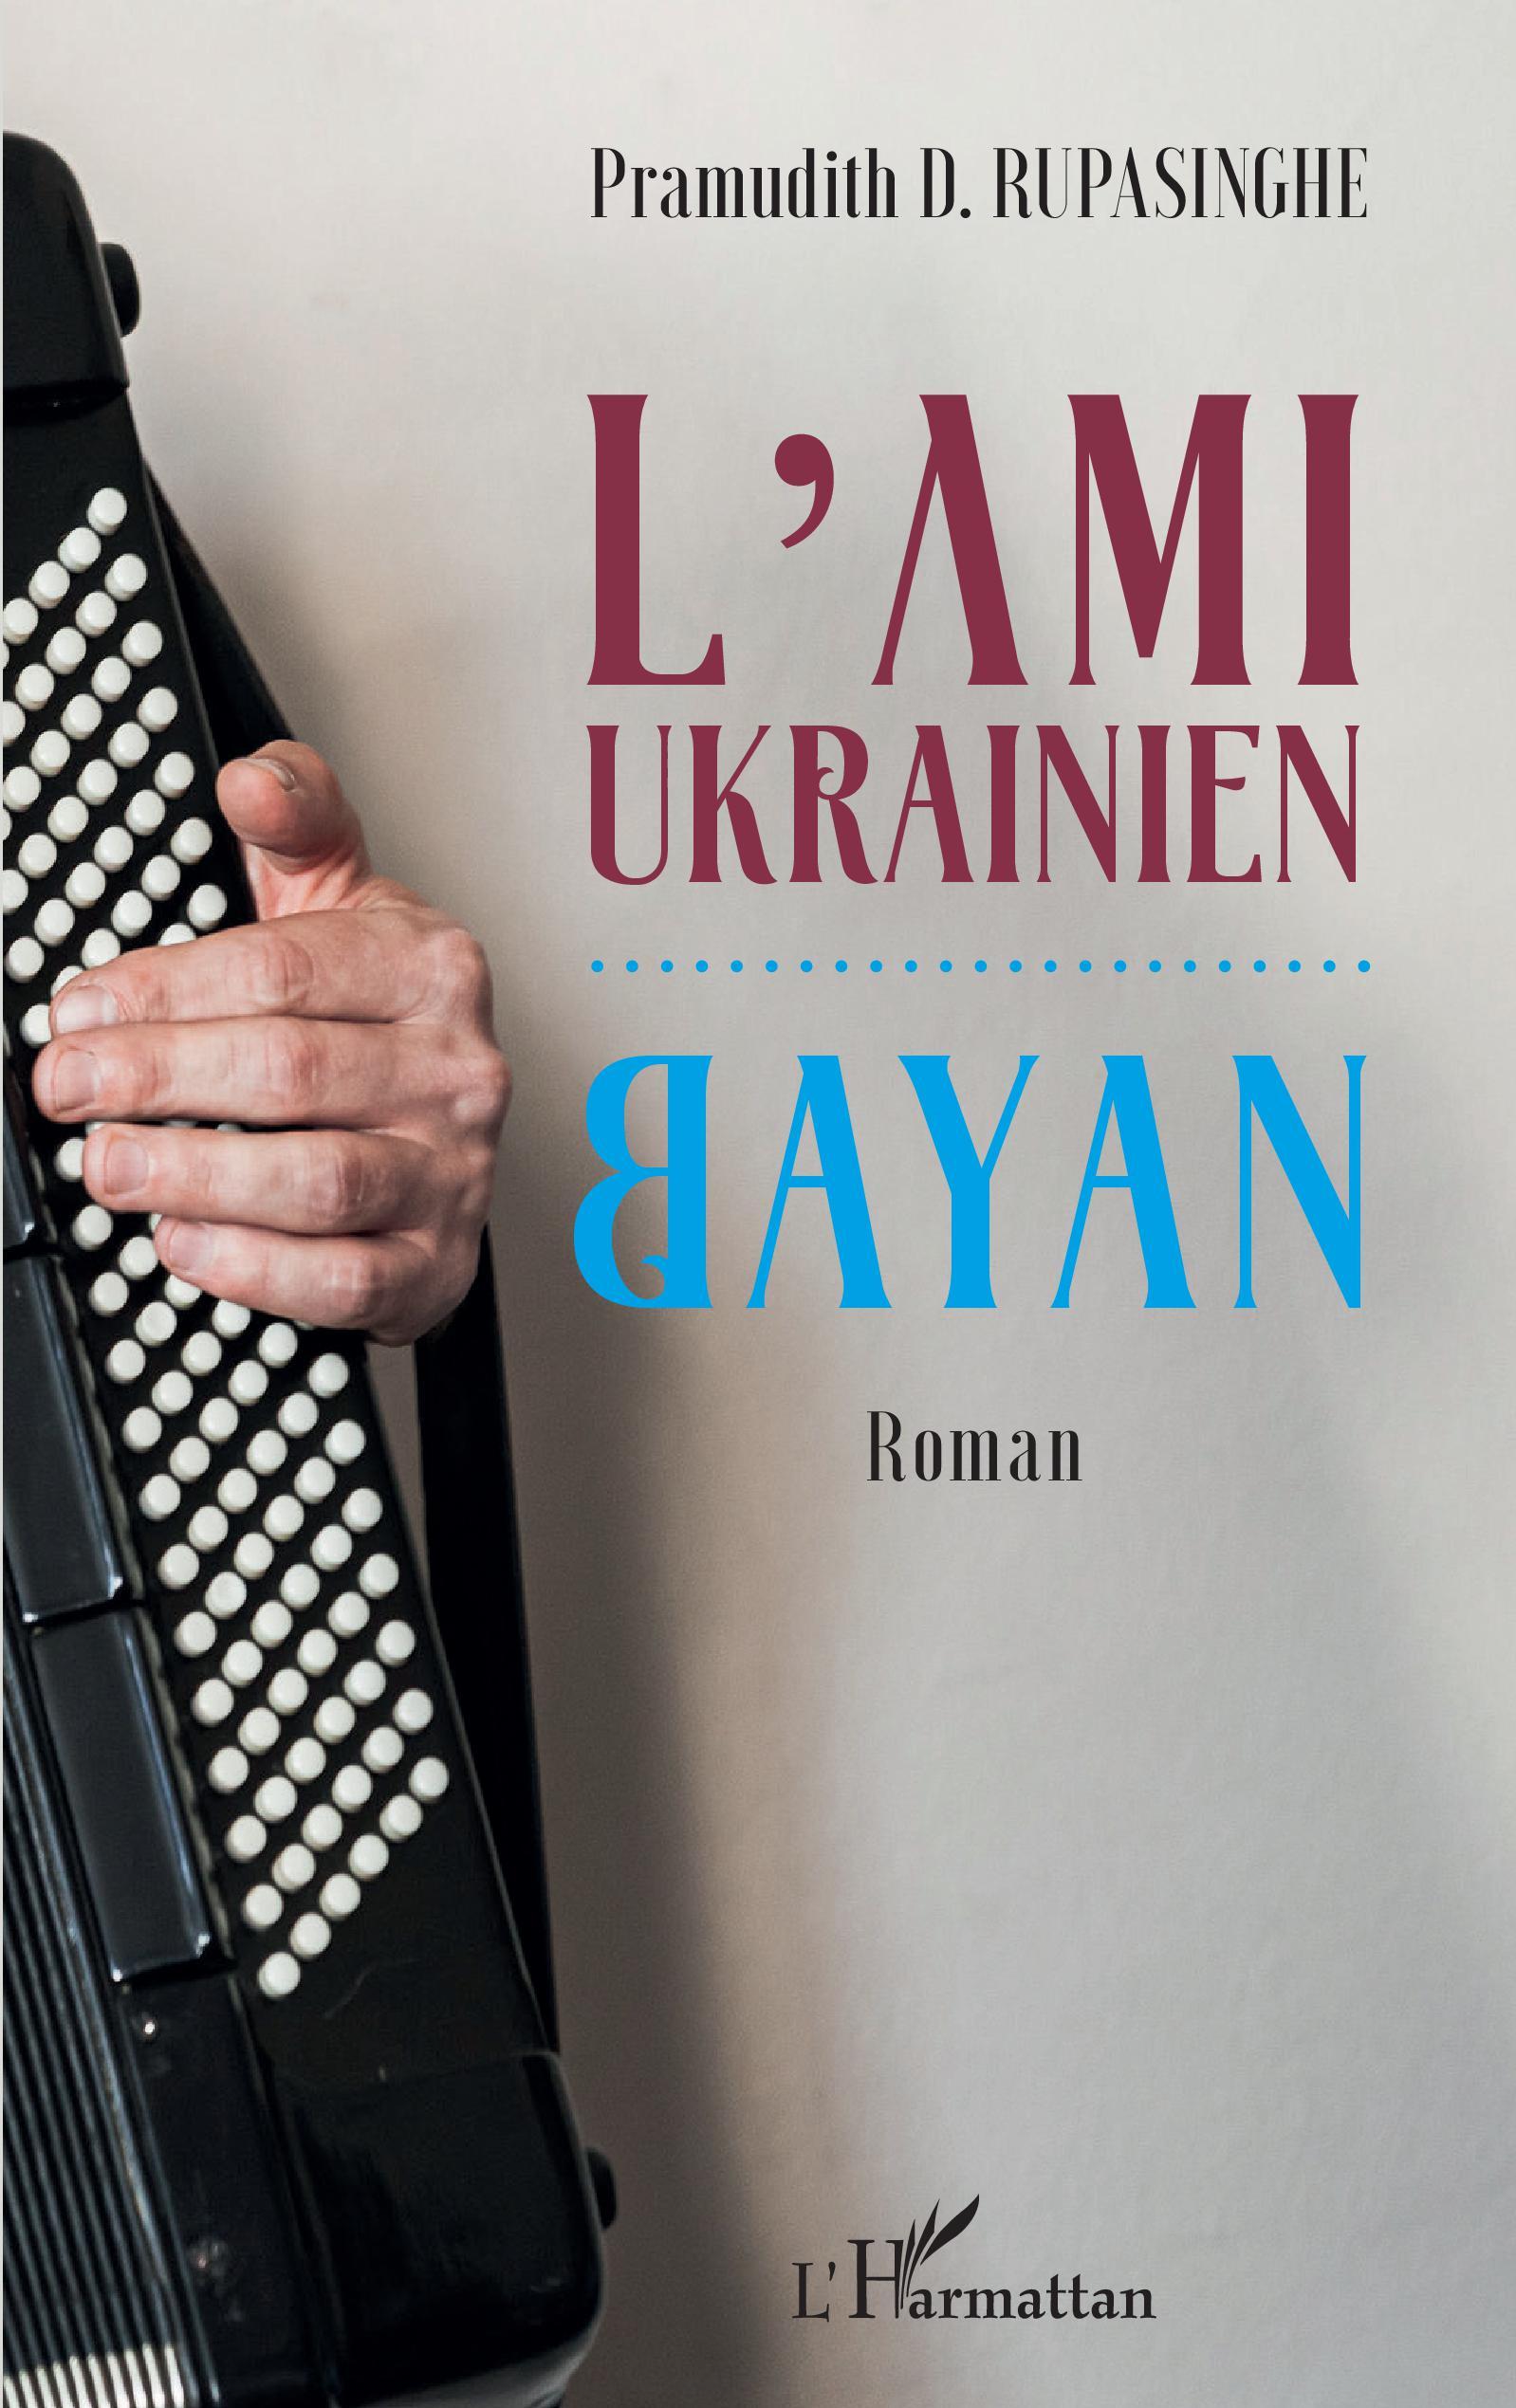 L'Ami ukrainien, Bayan (9782343246802-front-cover)